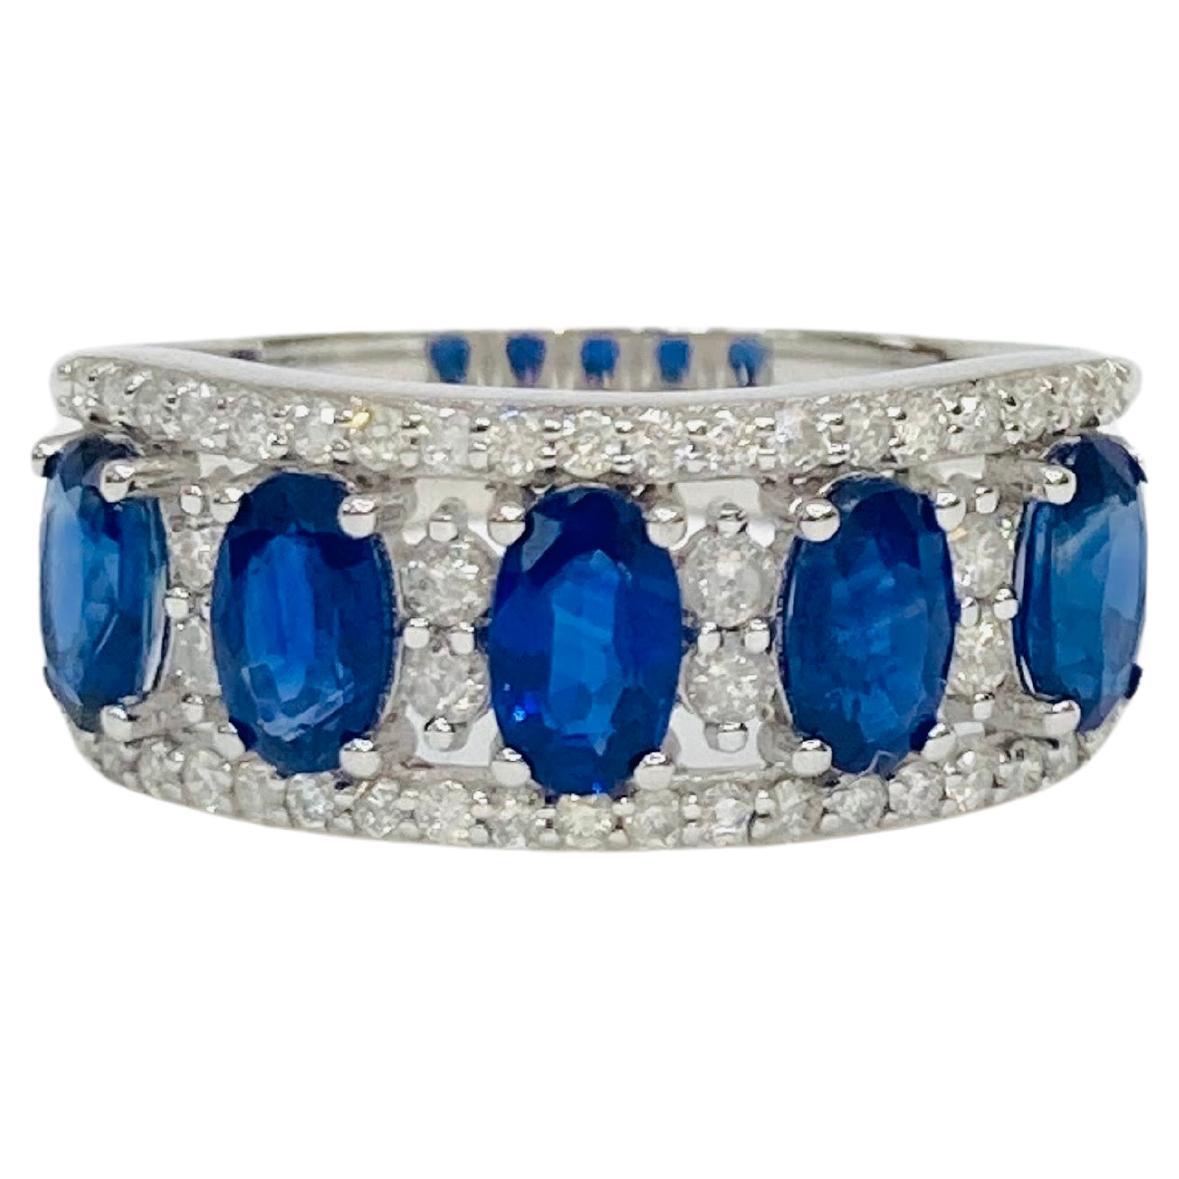 Bochic “Retro Vintage” Sapphire & Diamond  18K Gold & Eternity Cluster Ring.